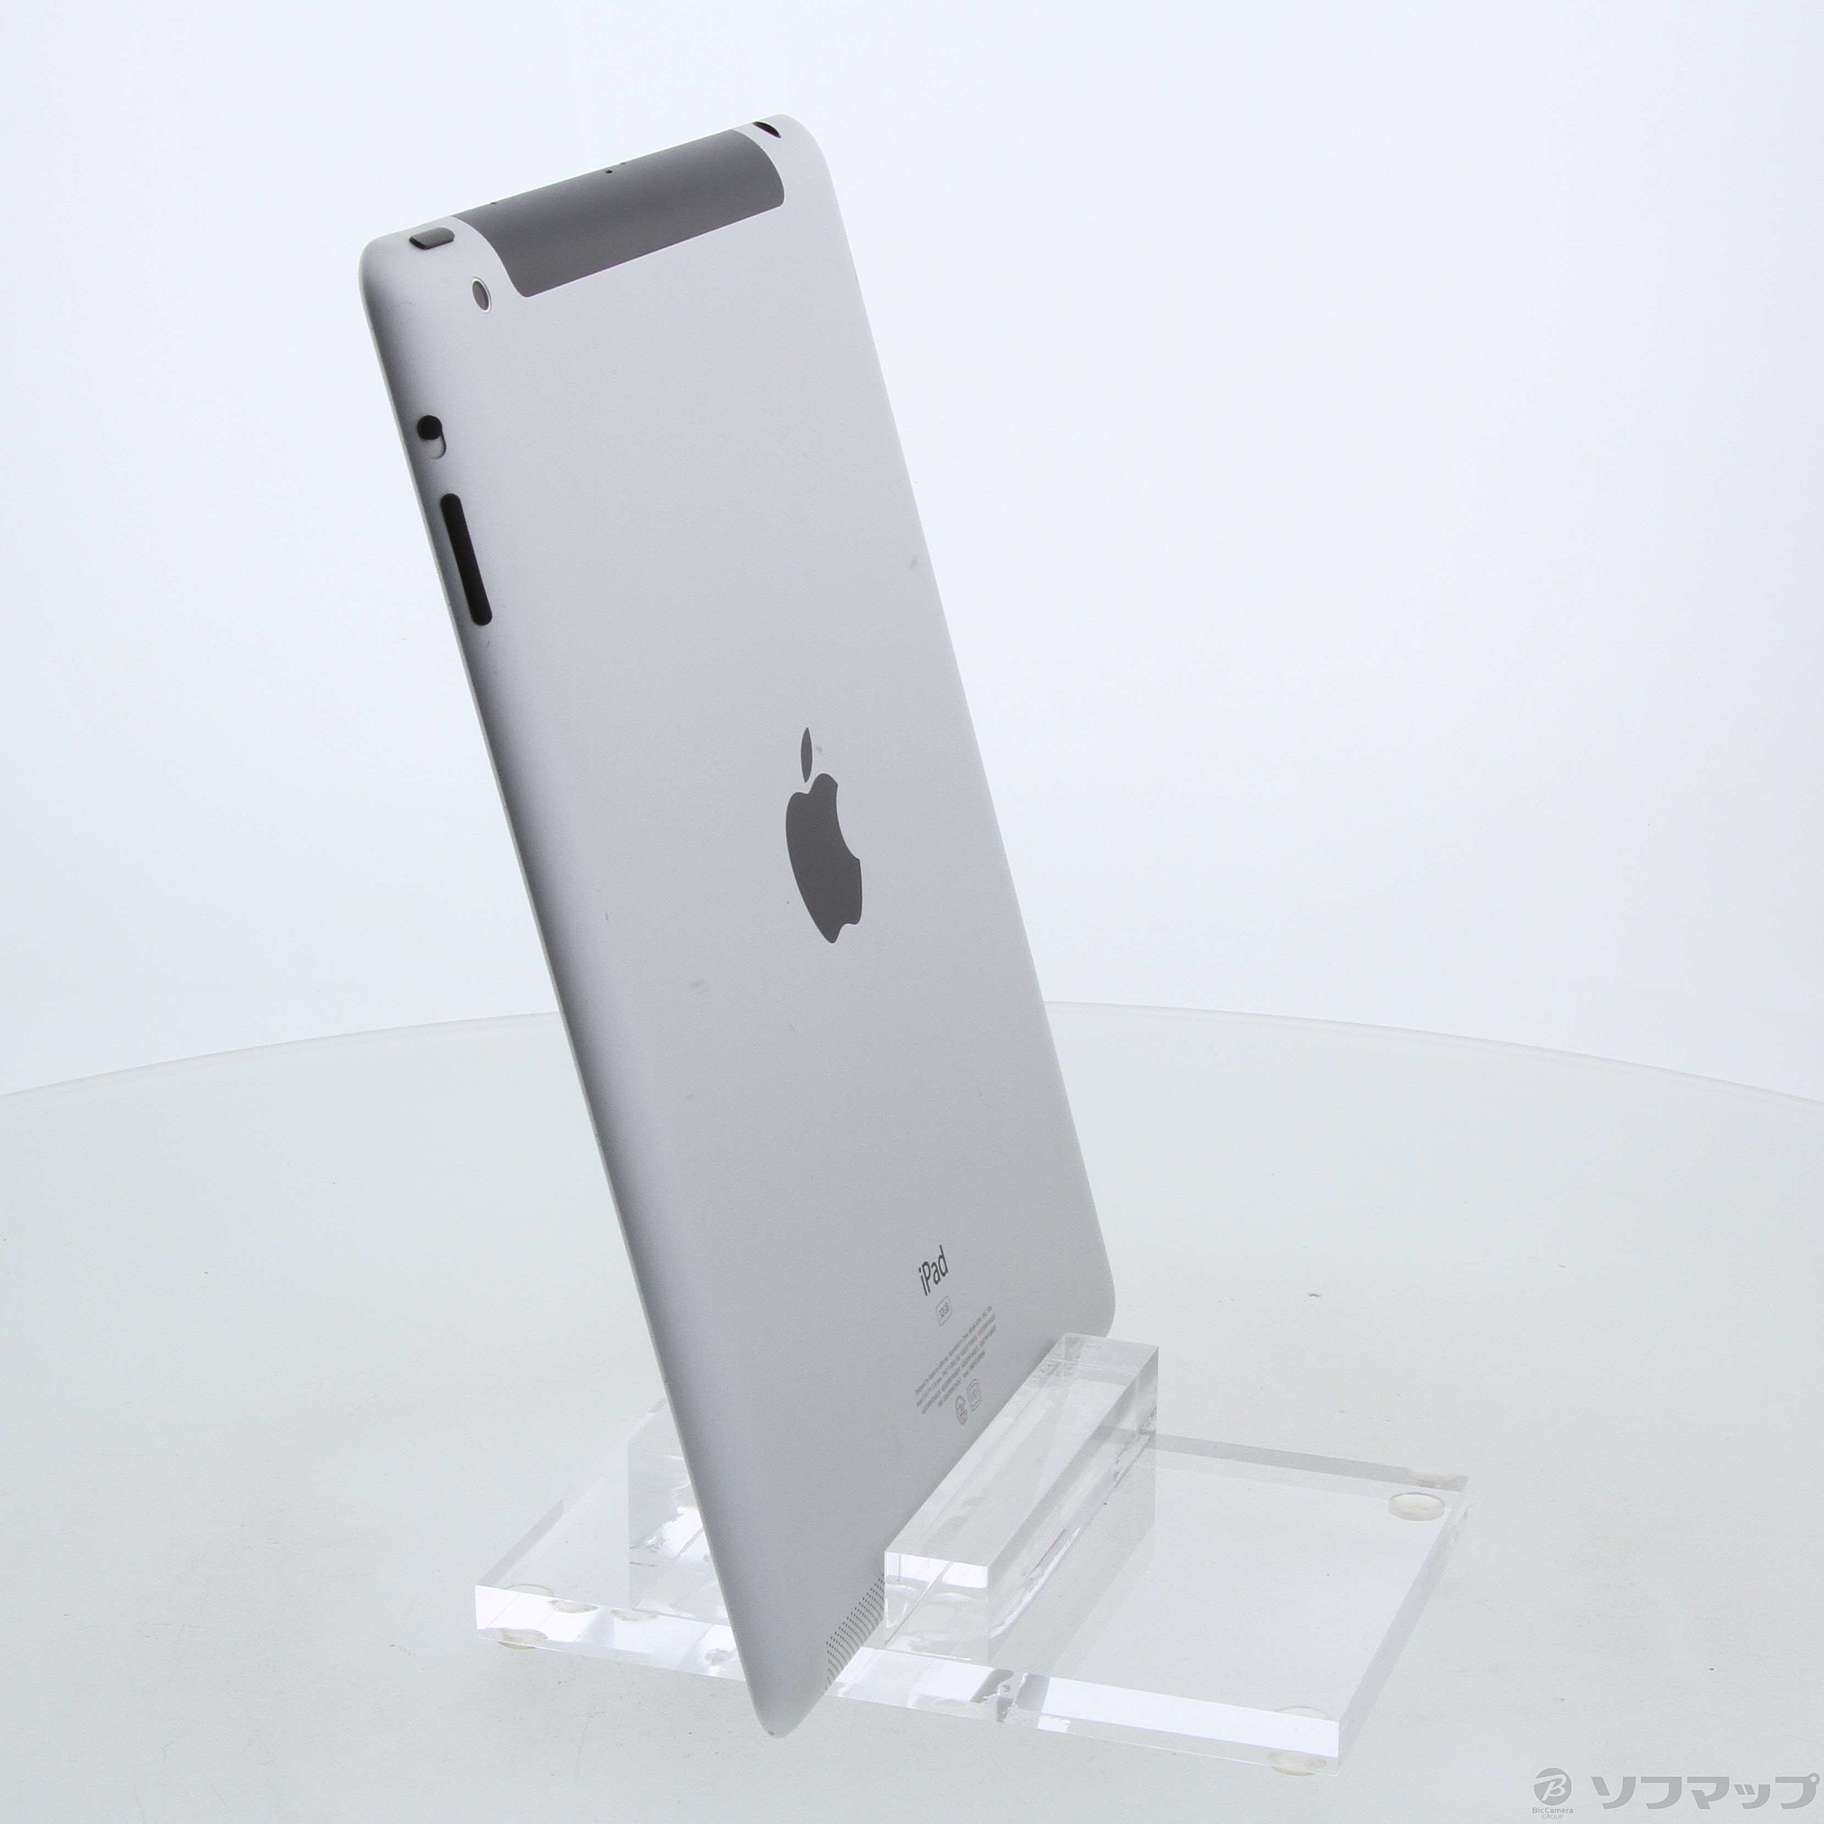 Apple iPad2　 Wi-Fiモデル 32GB ホワイト MC980J/A